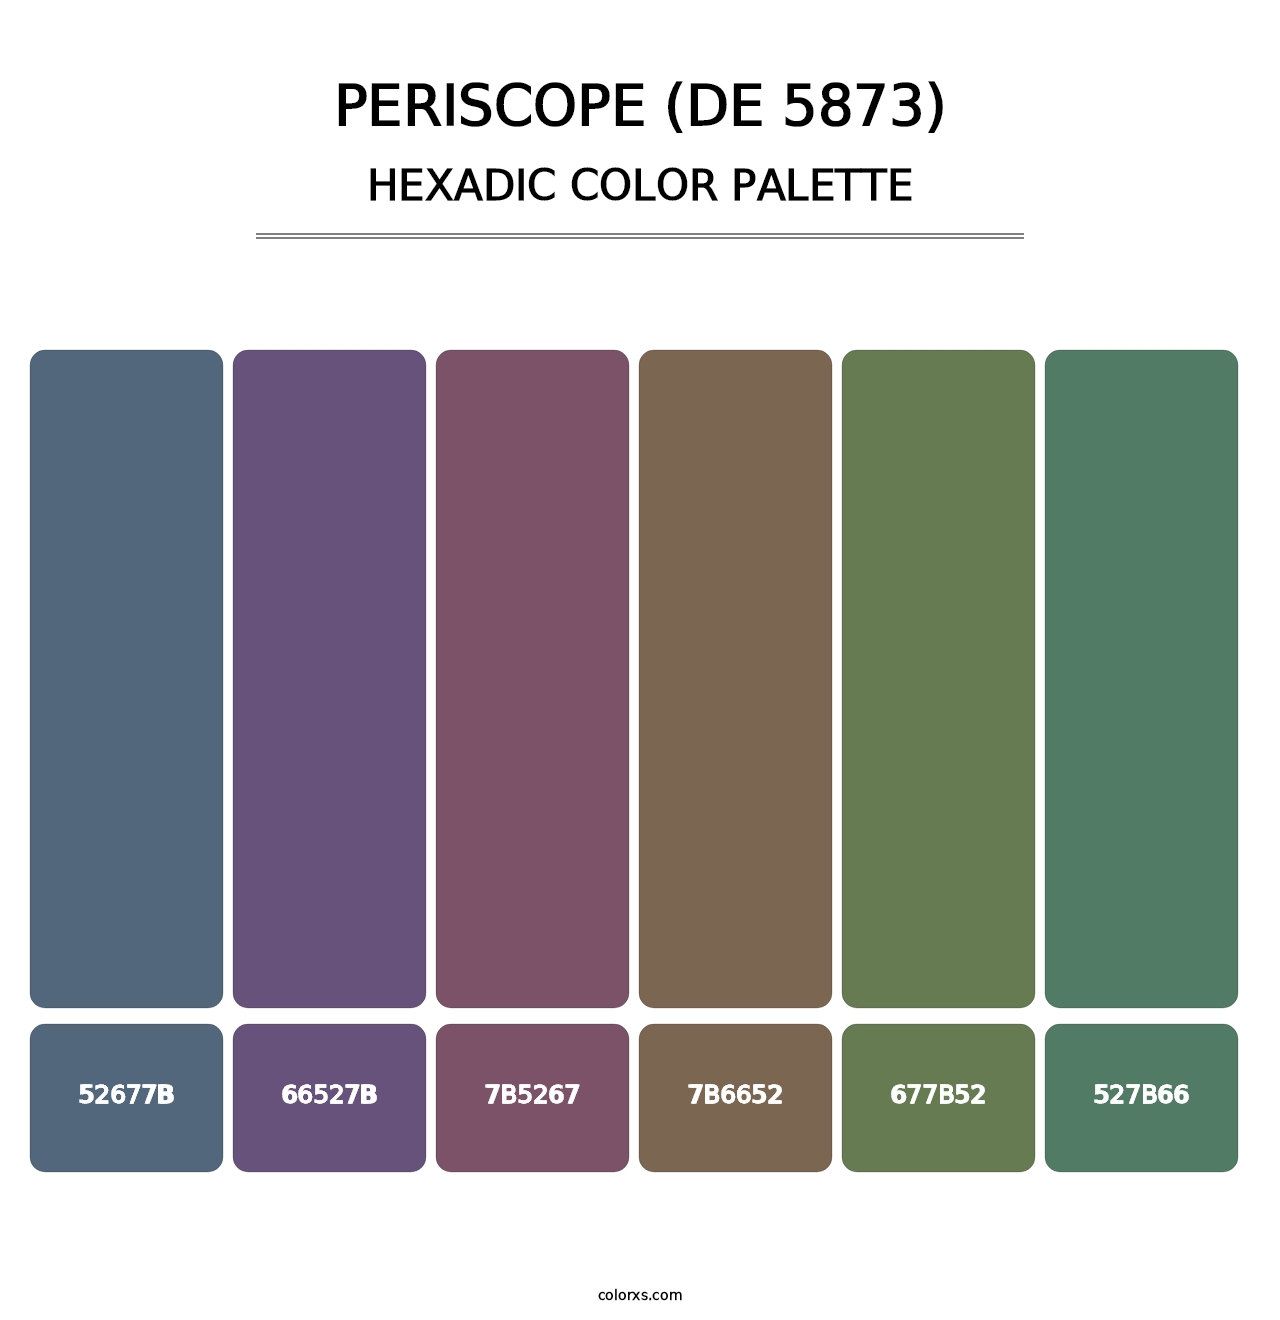 Periscope (DE 5873) - Hexadic Color Palette